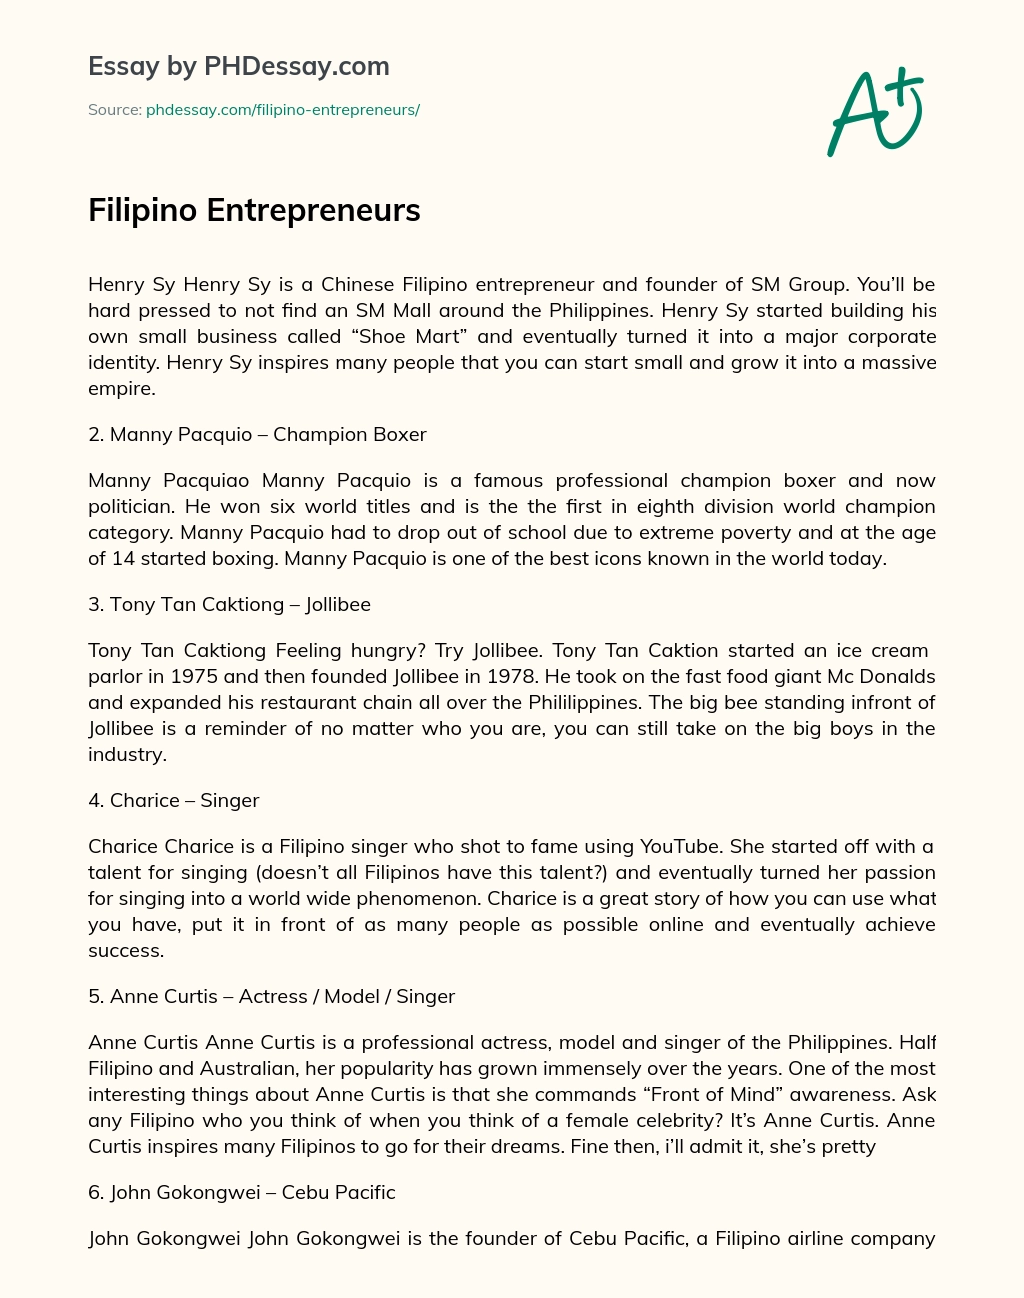 Filipino Entrepreneurs essay